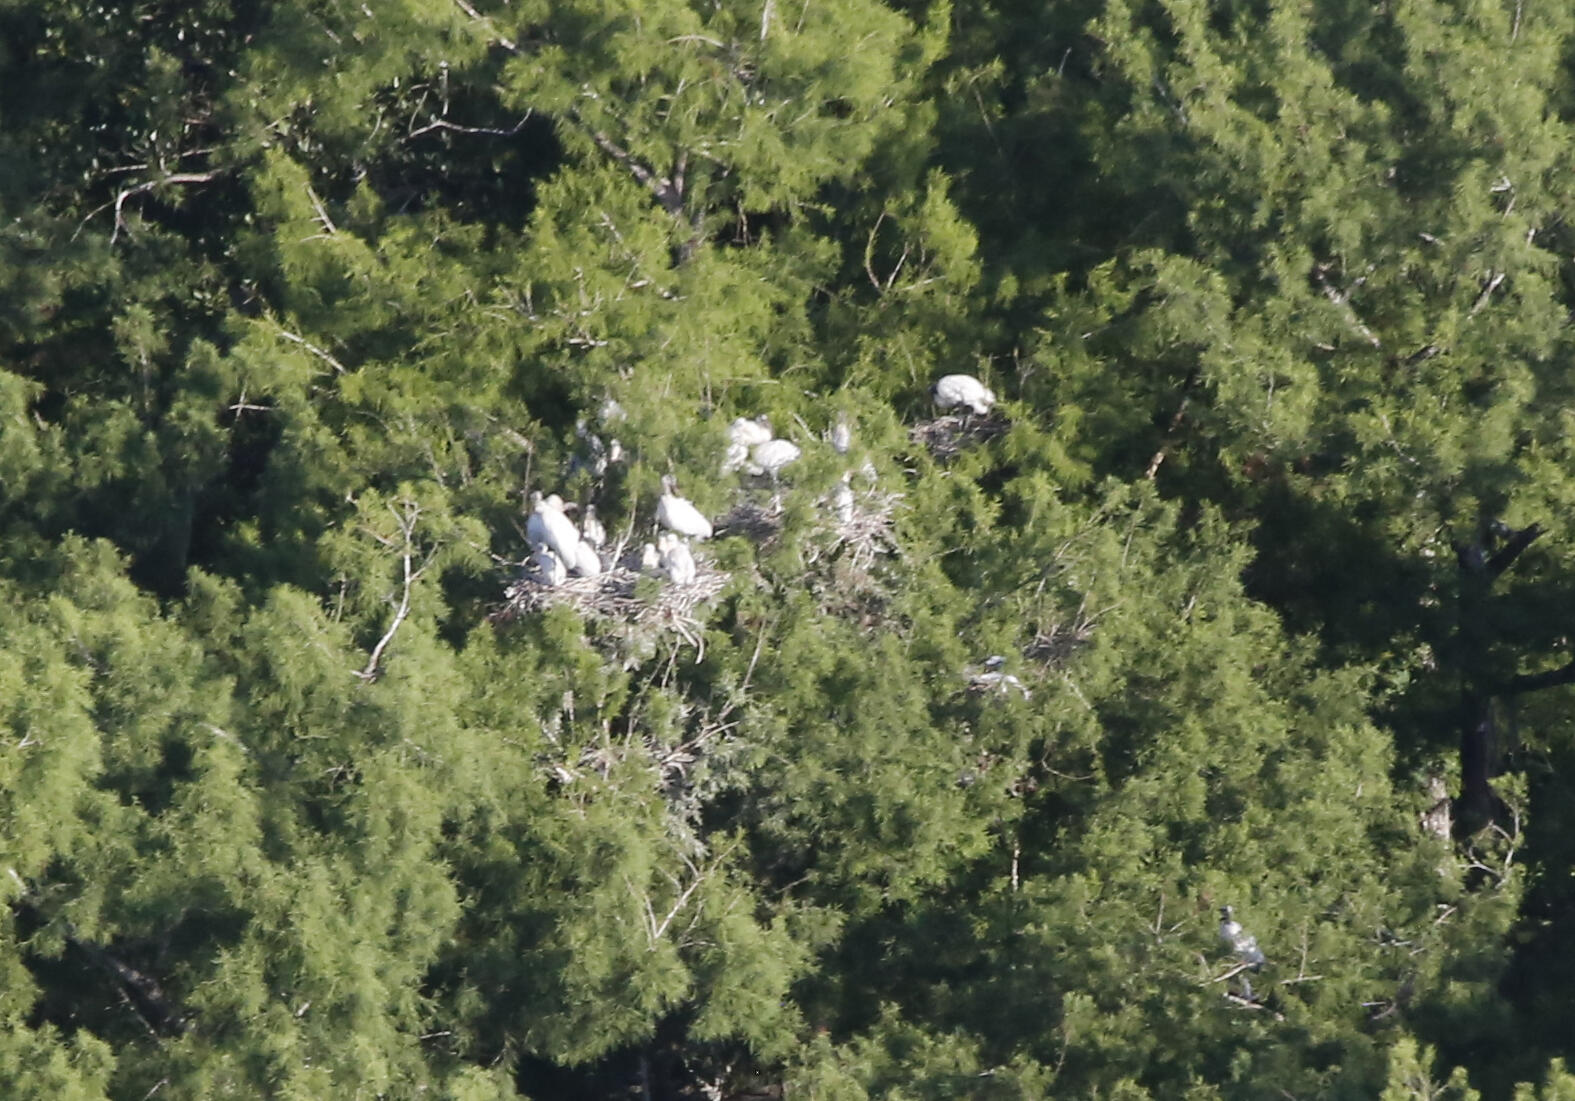 Wood stork nests